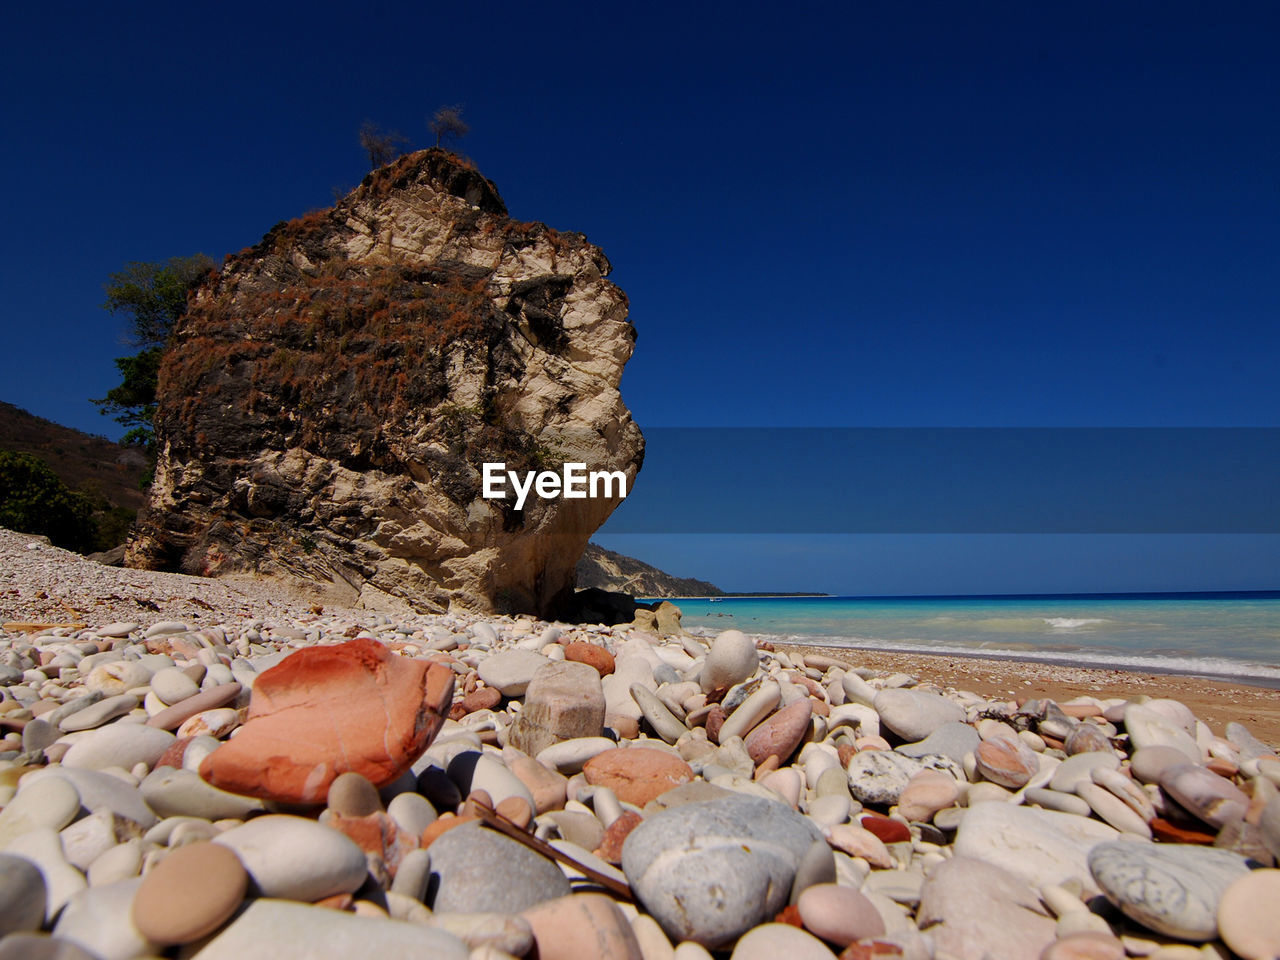 VIEW OF ROCKS ON BEACH